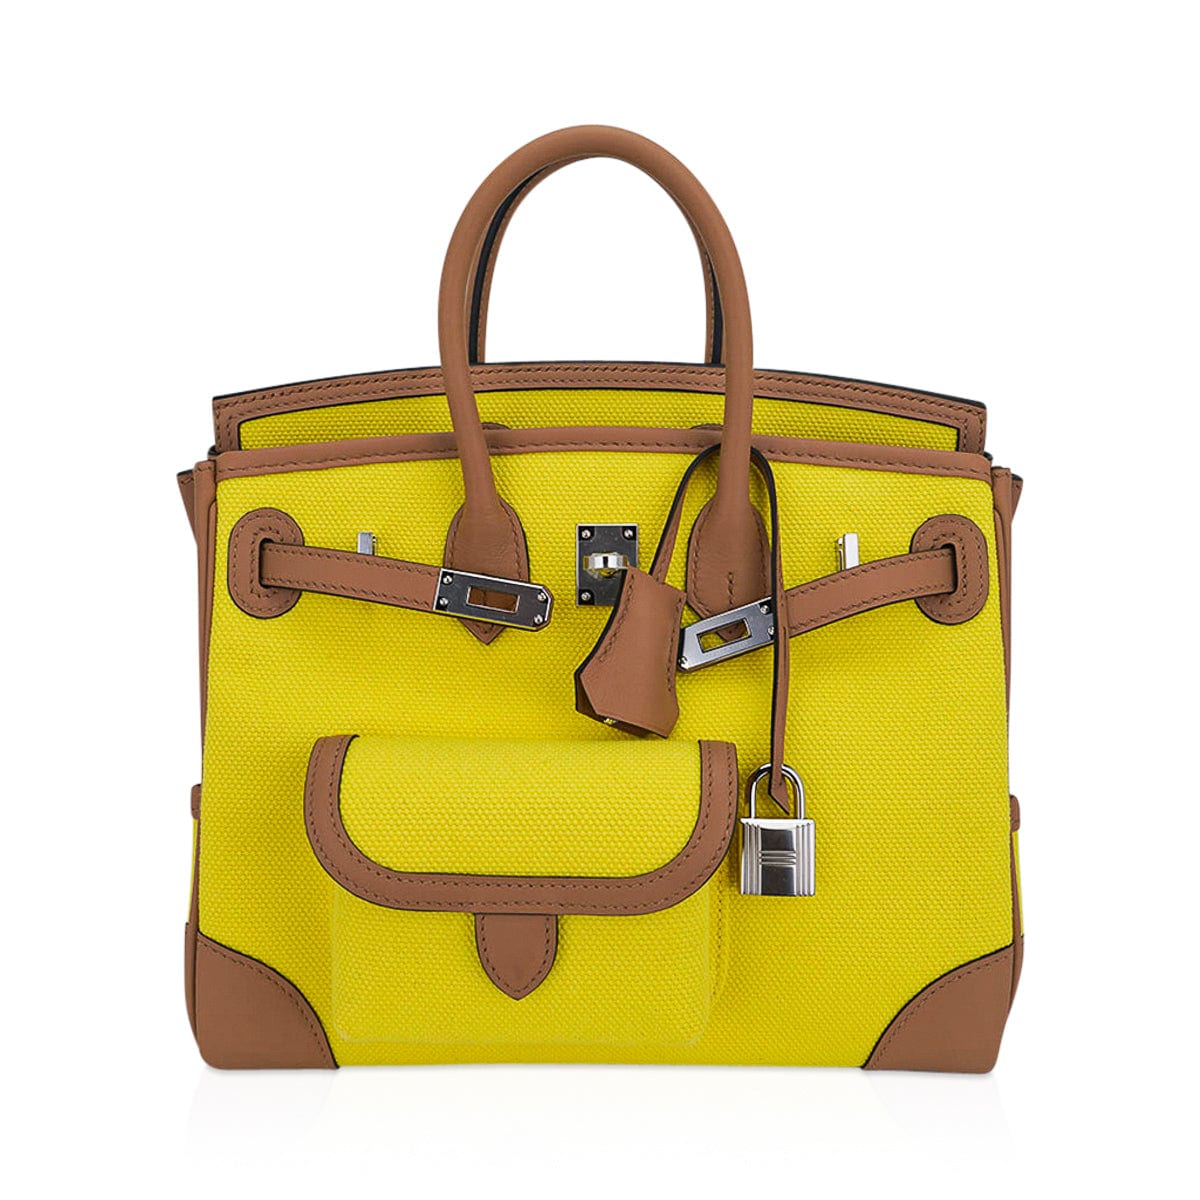 Buy Authentic Hermes Birkin Bags